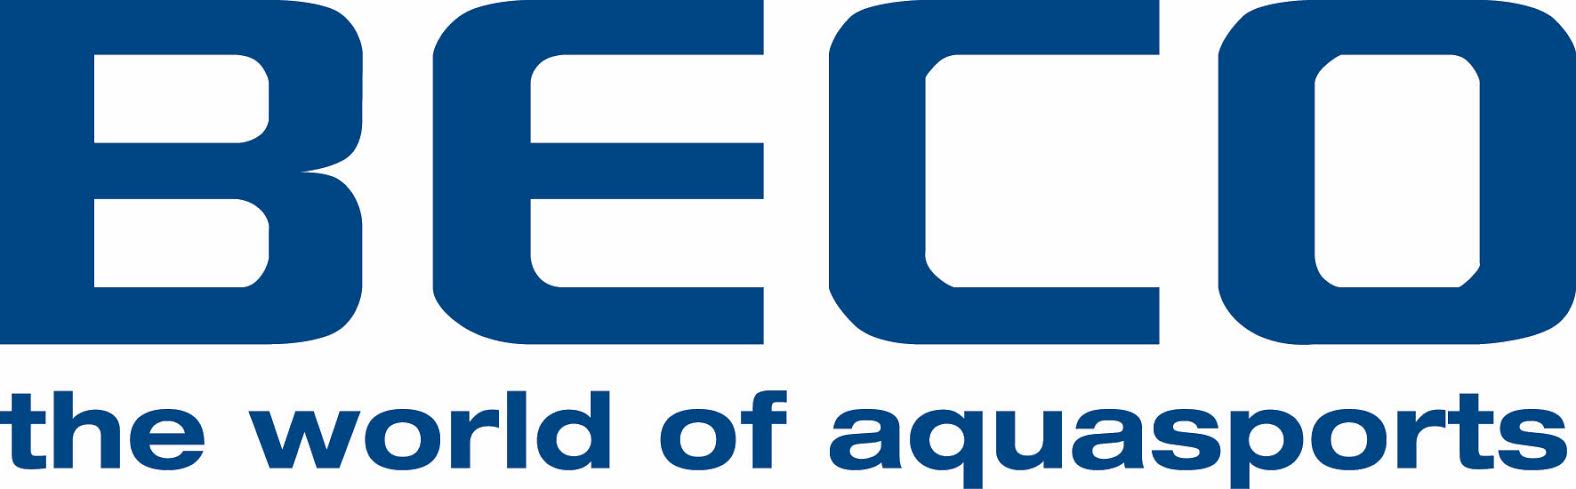 BECO the world of aqua sport